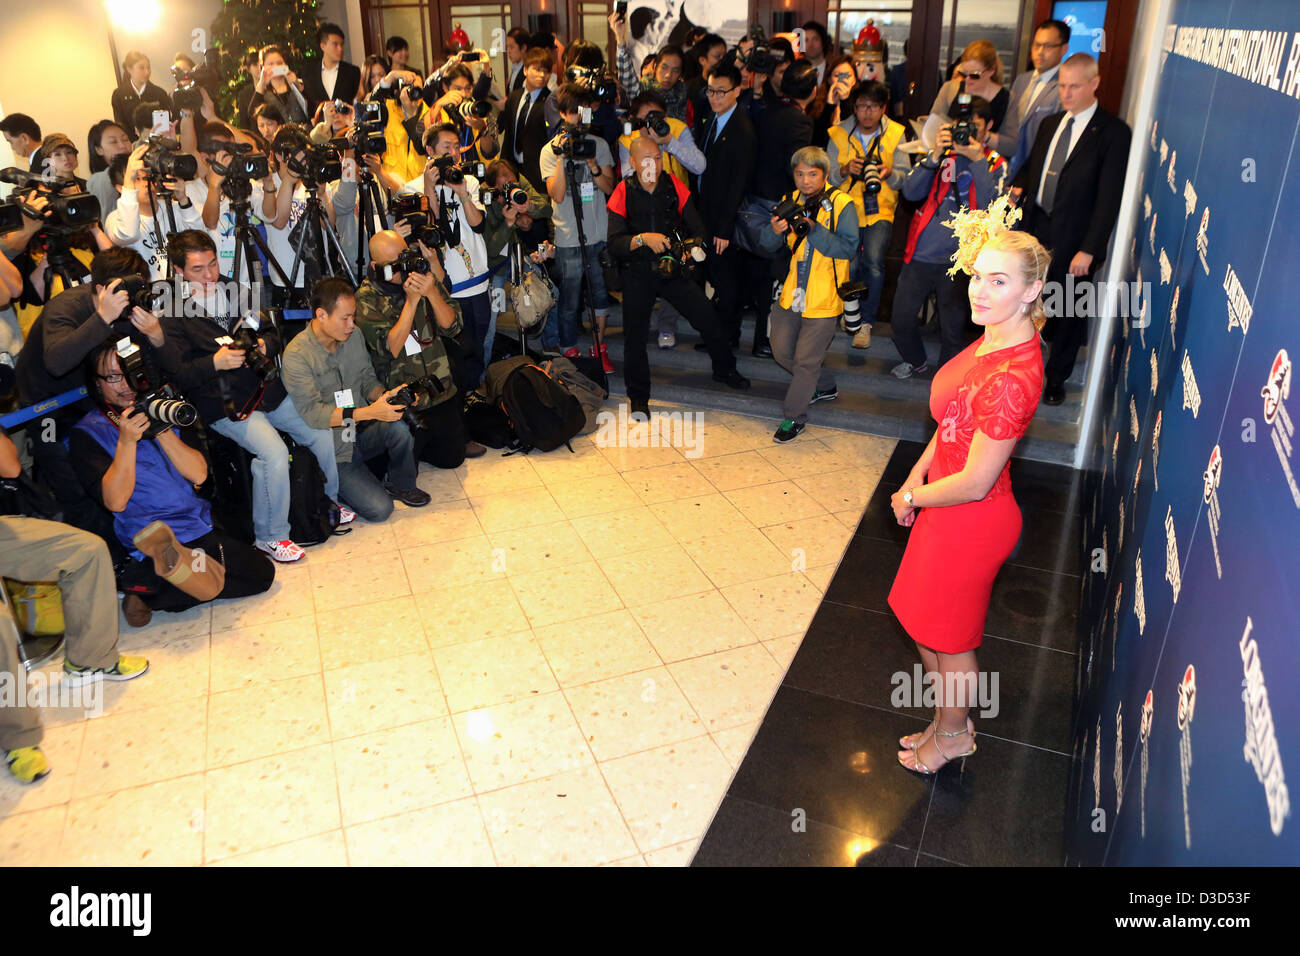 Hong Kong, China, Schauspielerin Kate Winslet vor Presse-Fotografen posiert Stockfoto